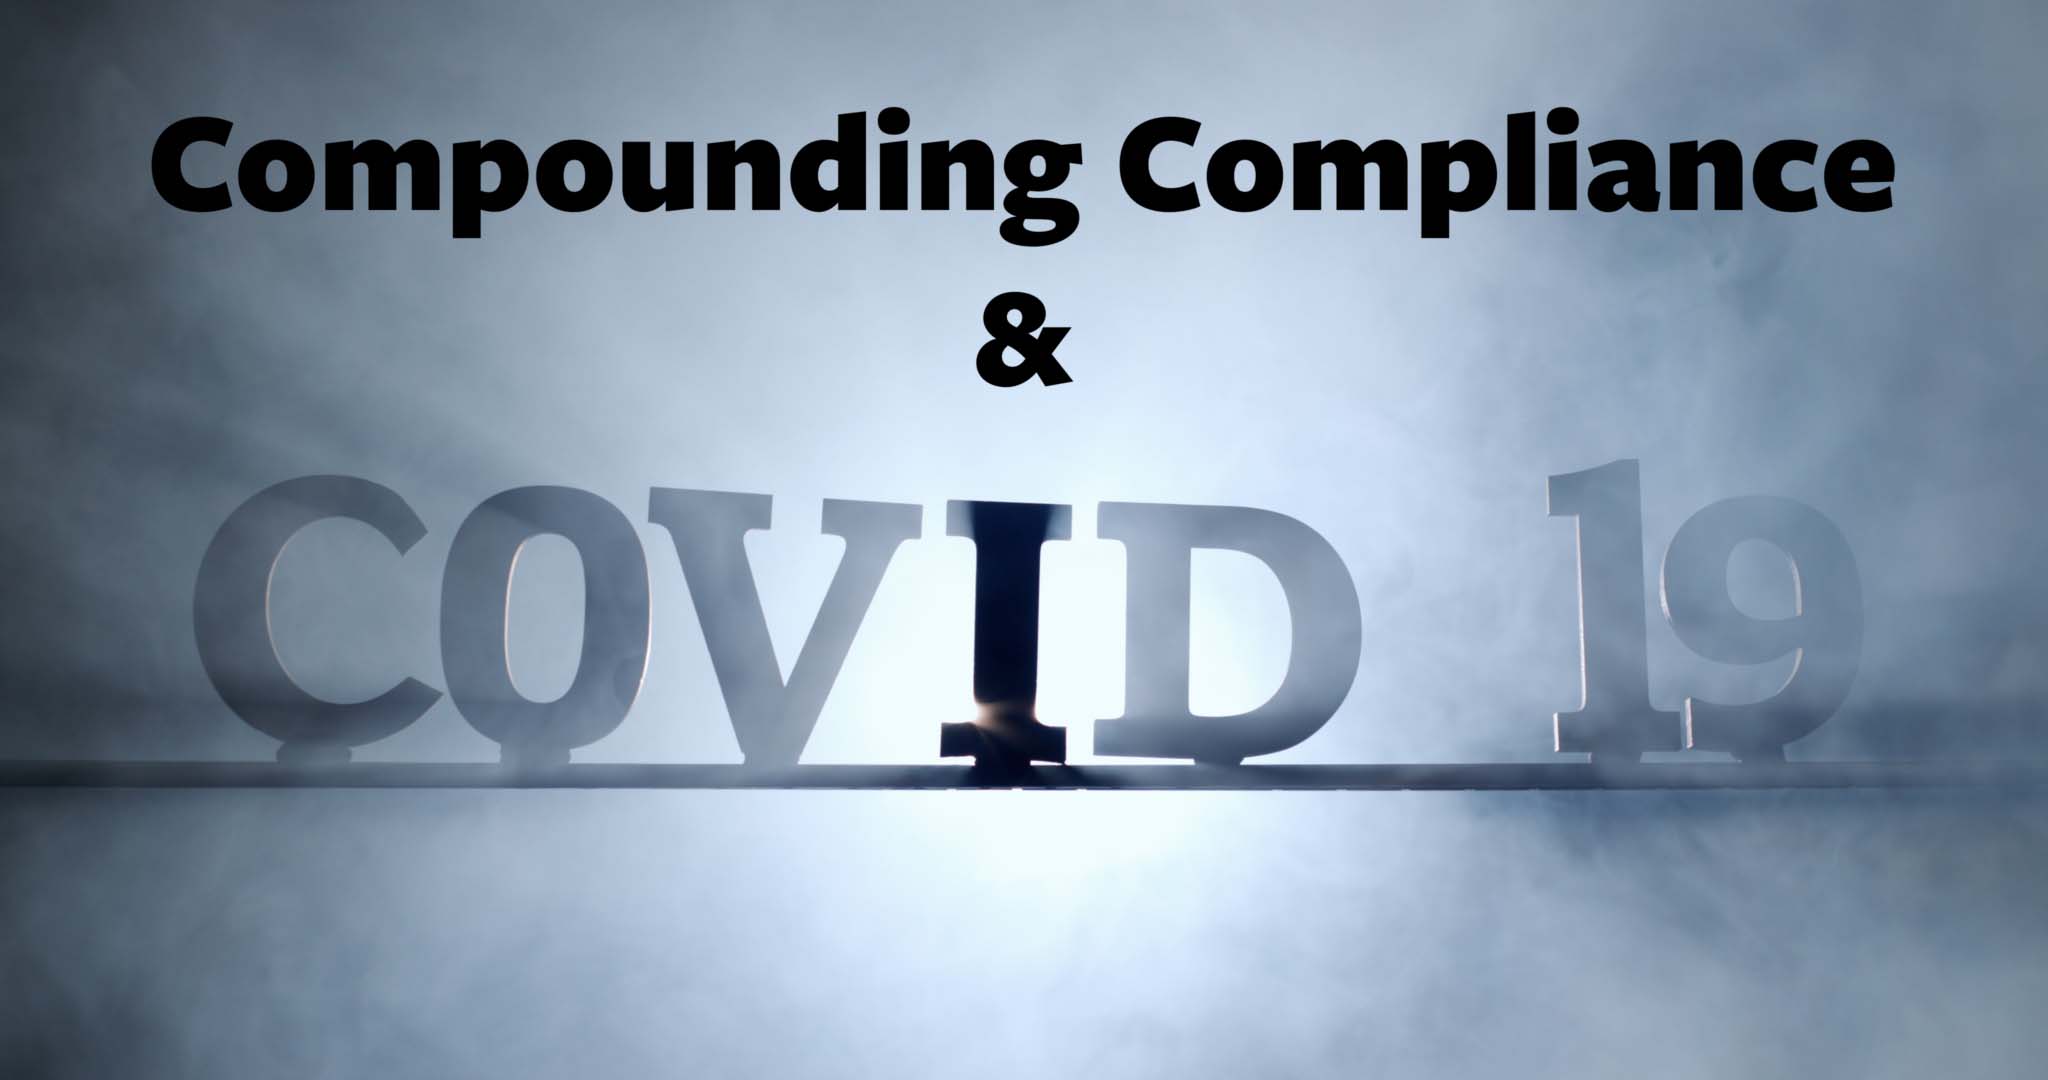 Illustrative image - Compounding Compliance & COVID 19